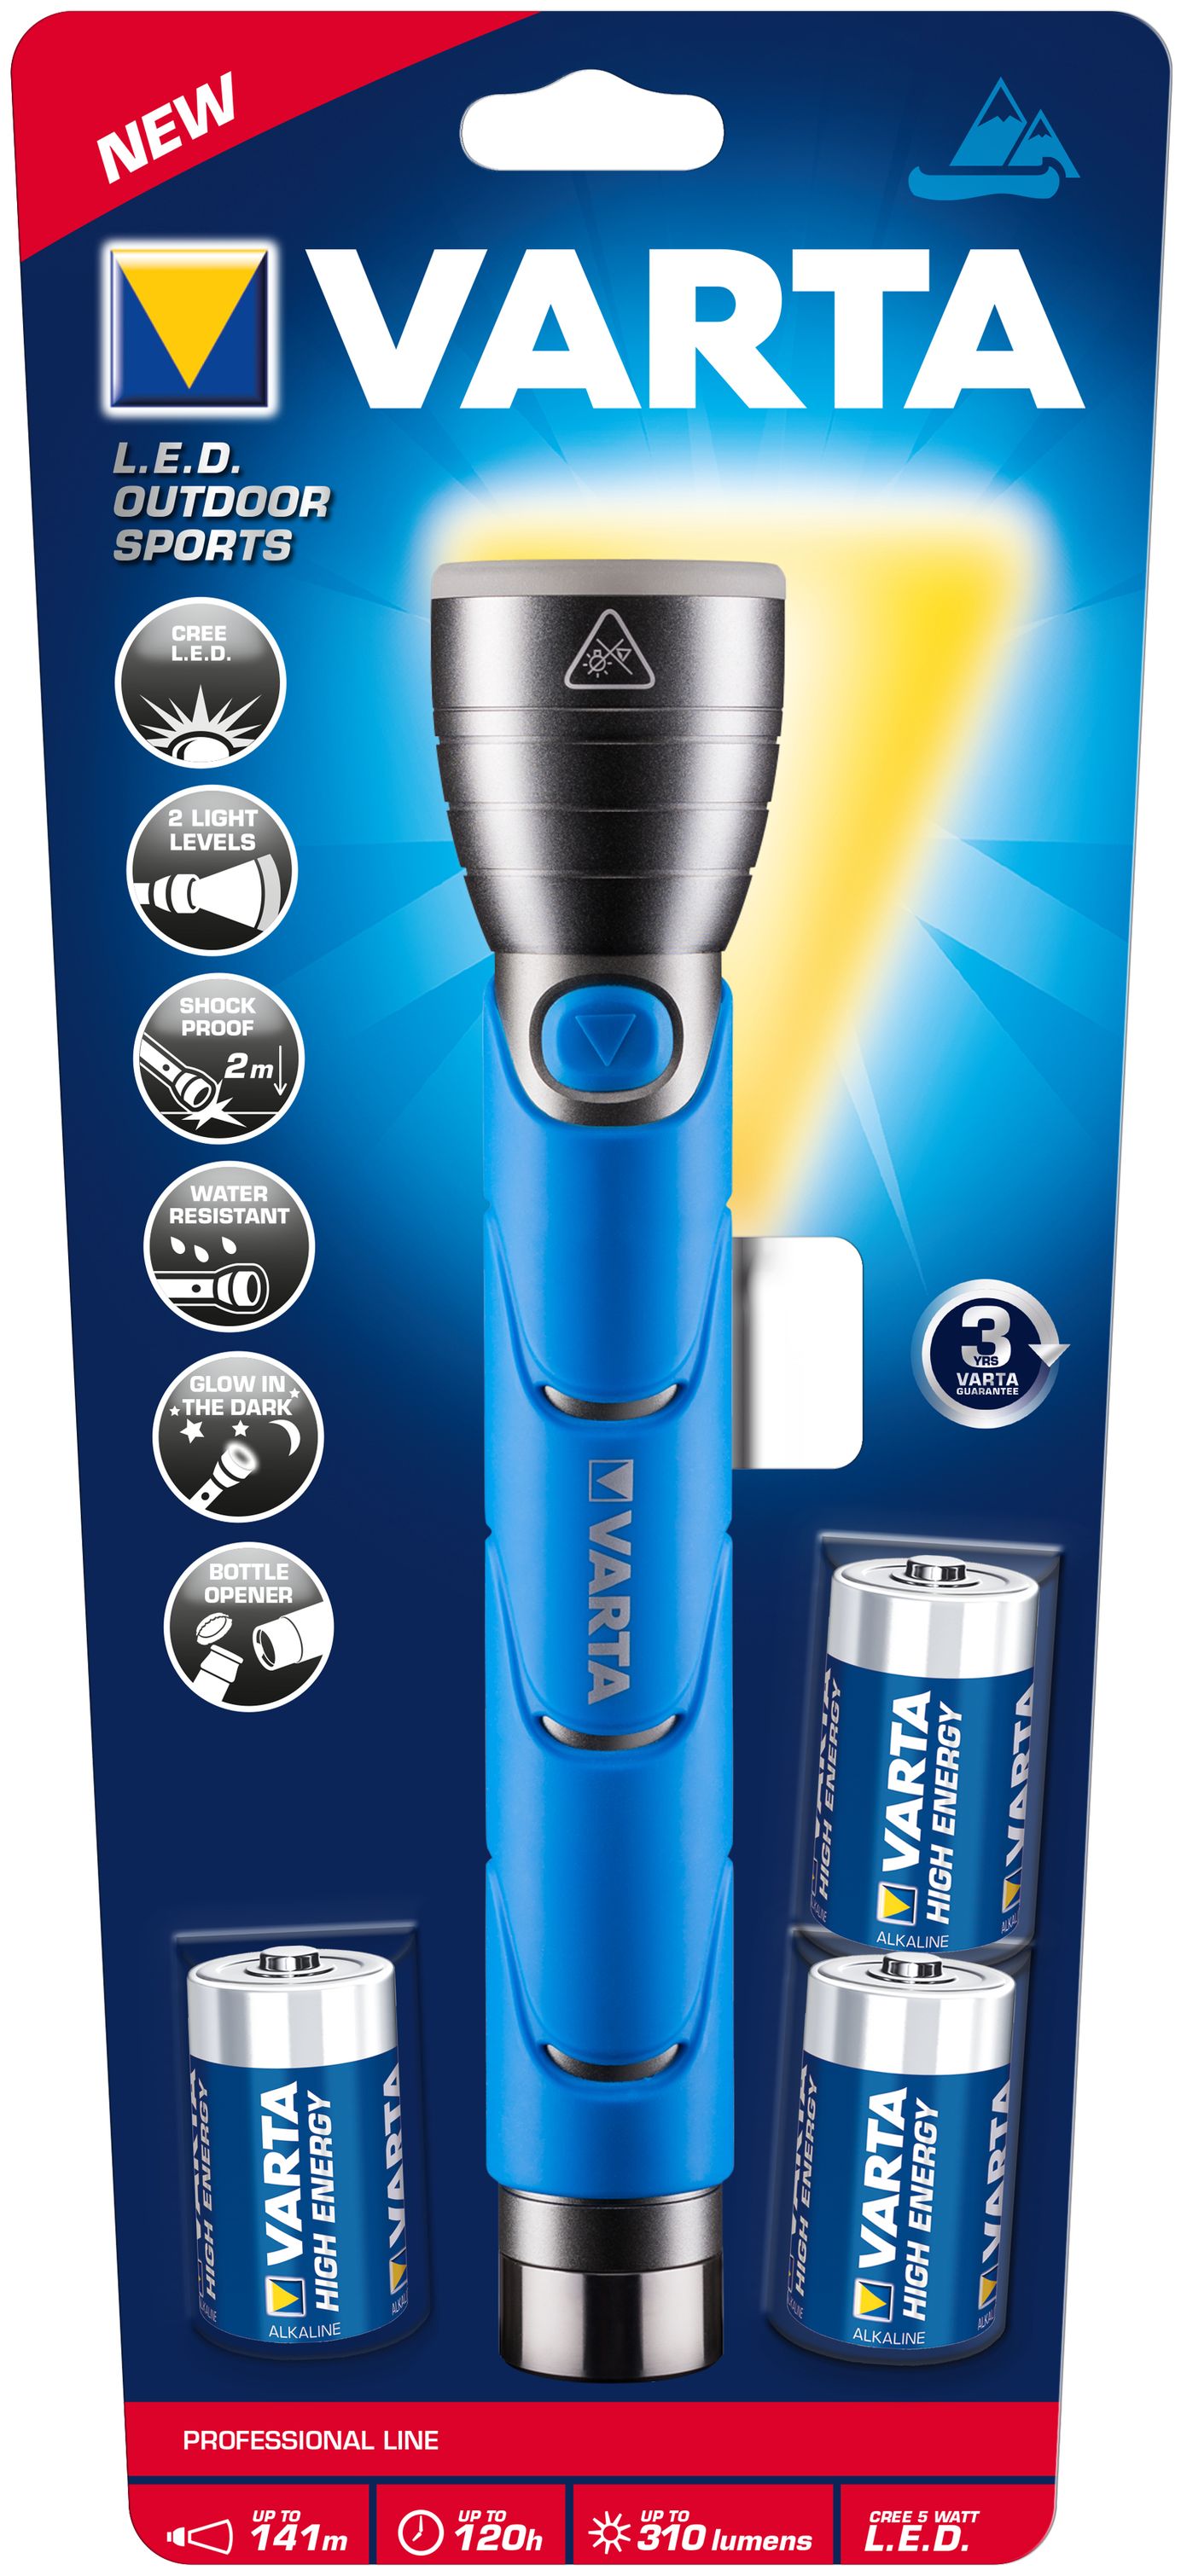 Varta Outdoor Sports Flashlight 3C bei LED-Taschenlampe Boomstore Leuchtmodi 2